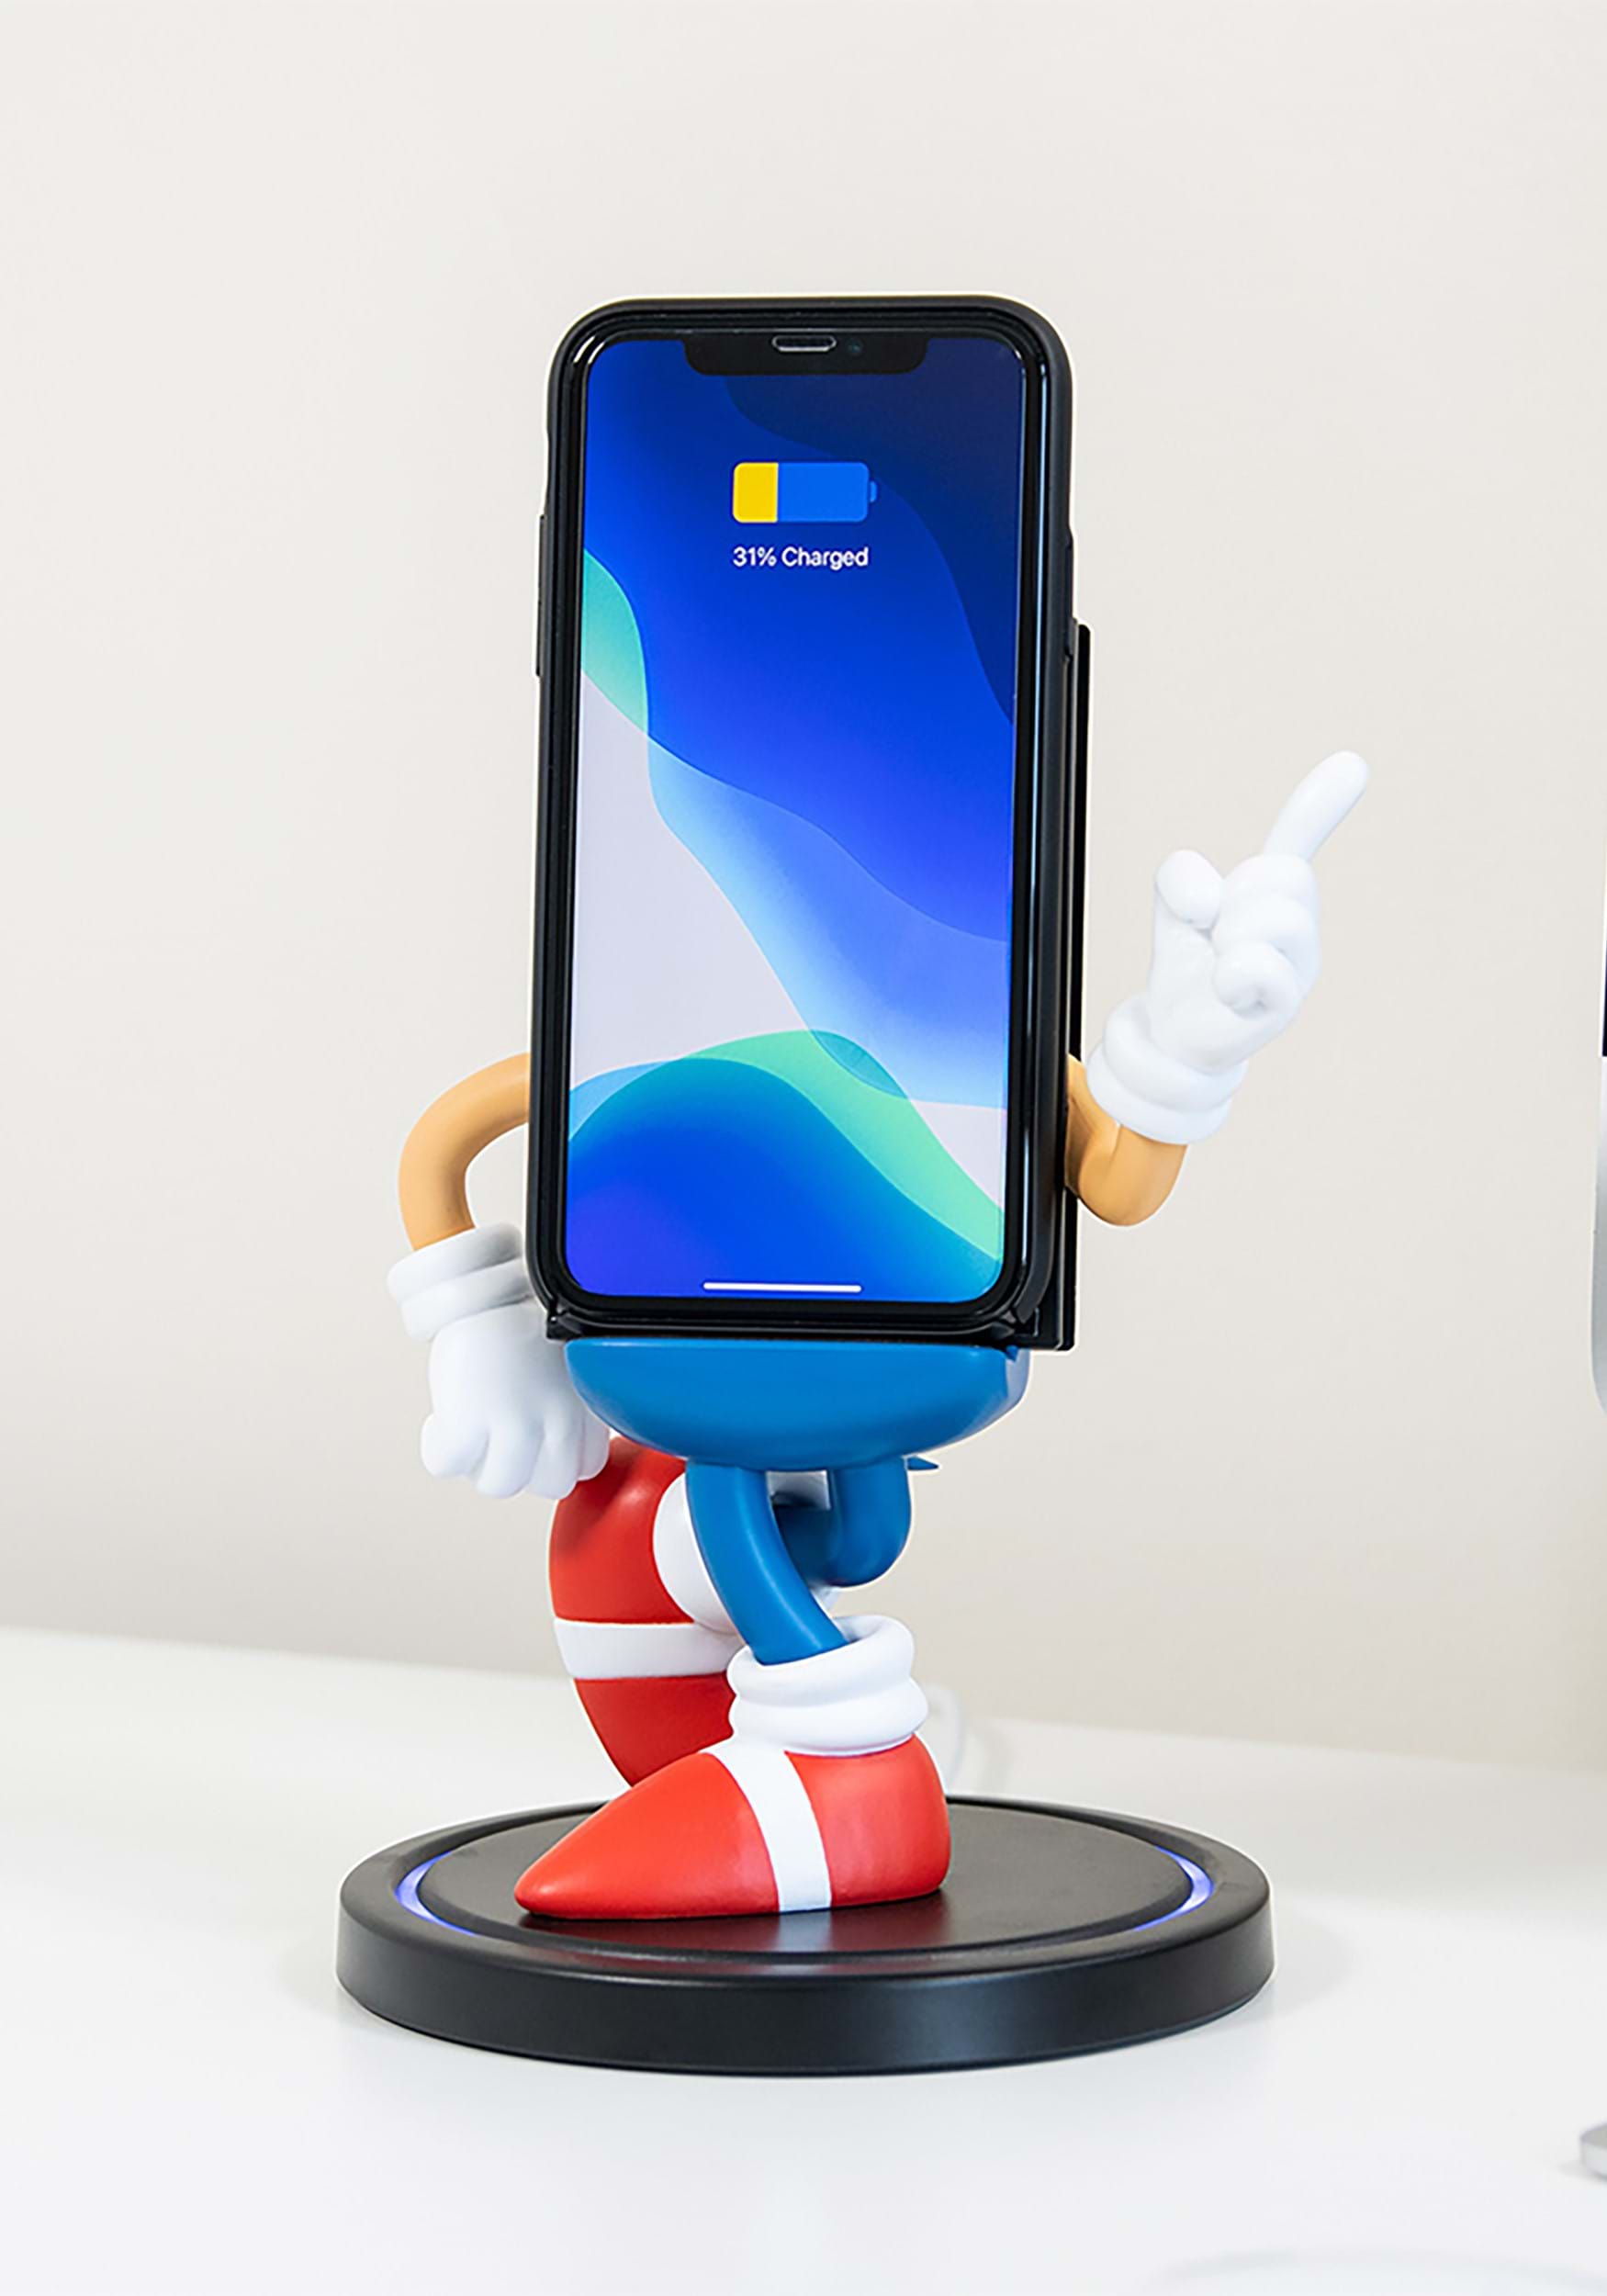 Sonic The Hedgehog Power Idolz Wireless Phone Charging Dock